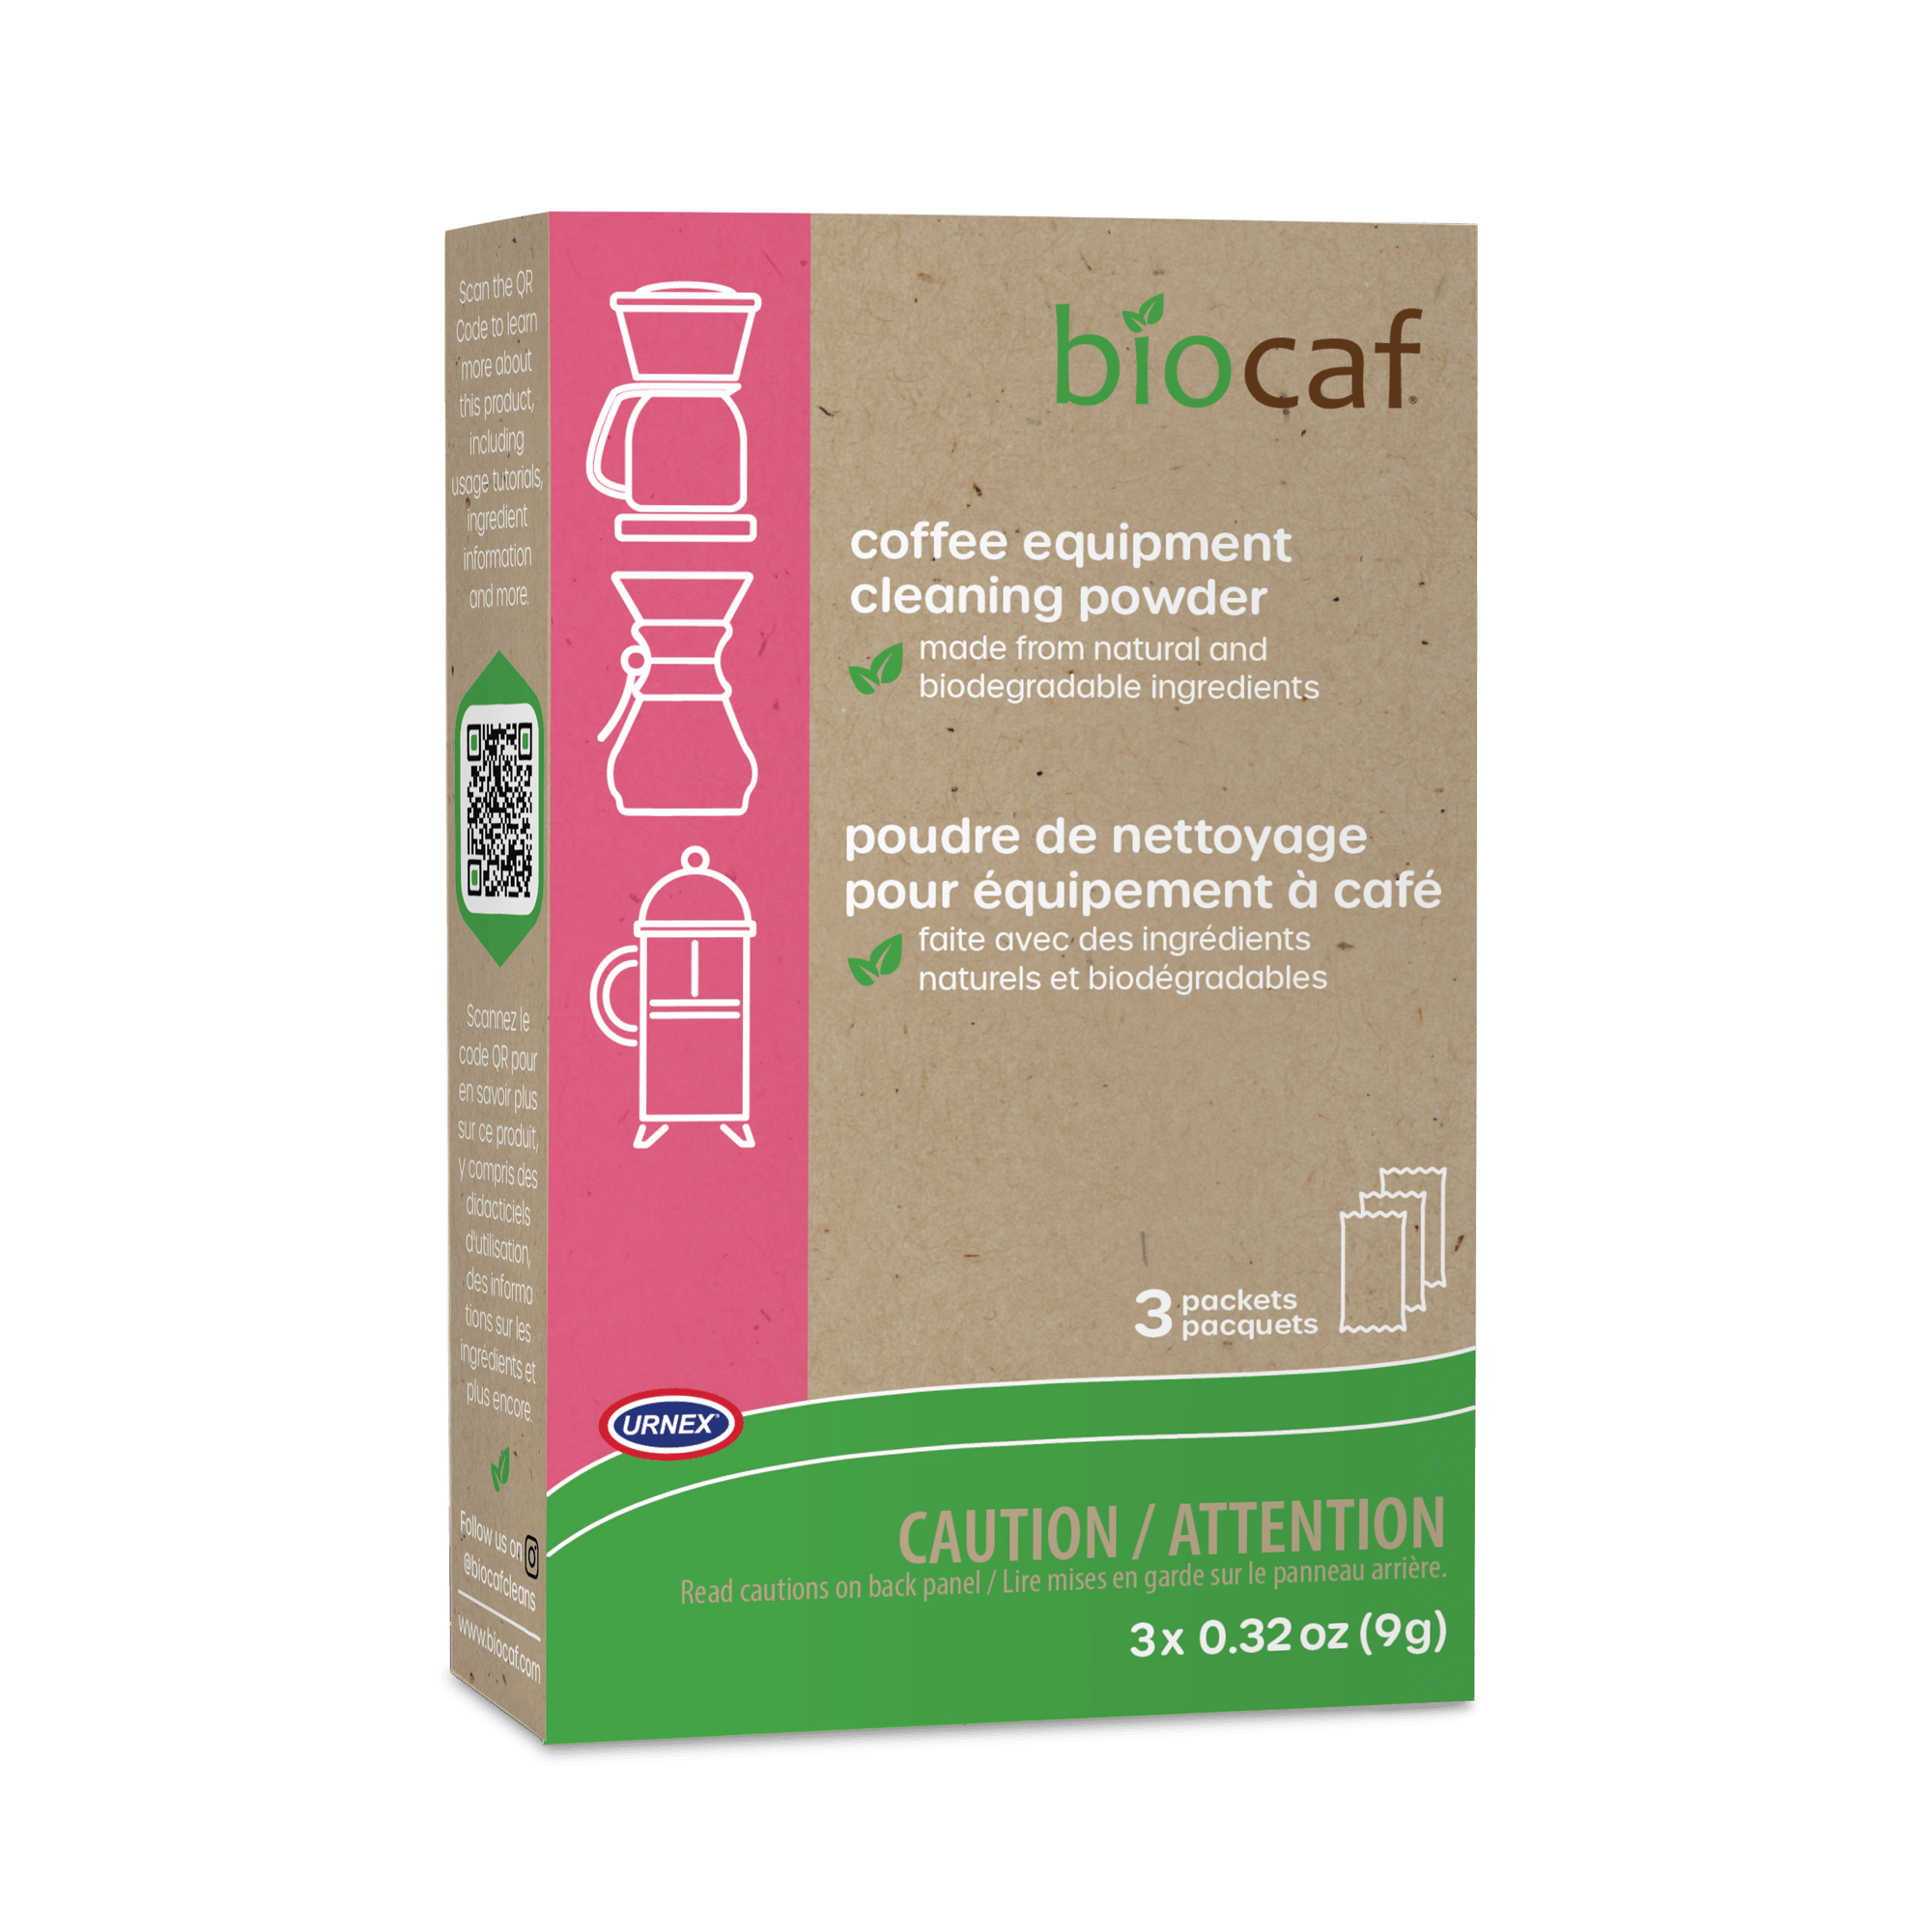 A box of Biocaf Coffee Equipment Cleaning Powder